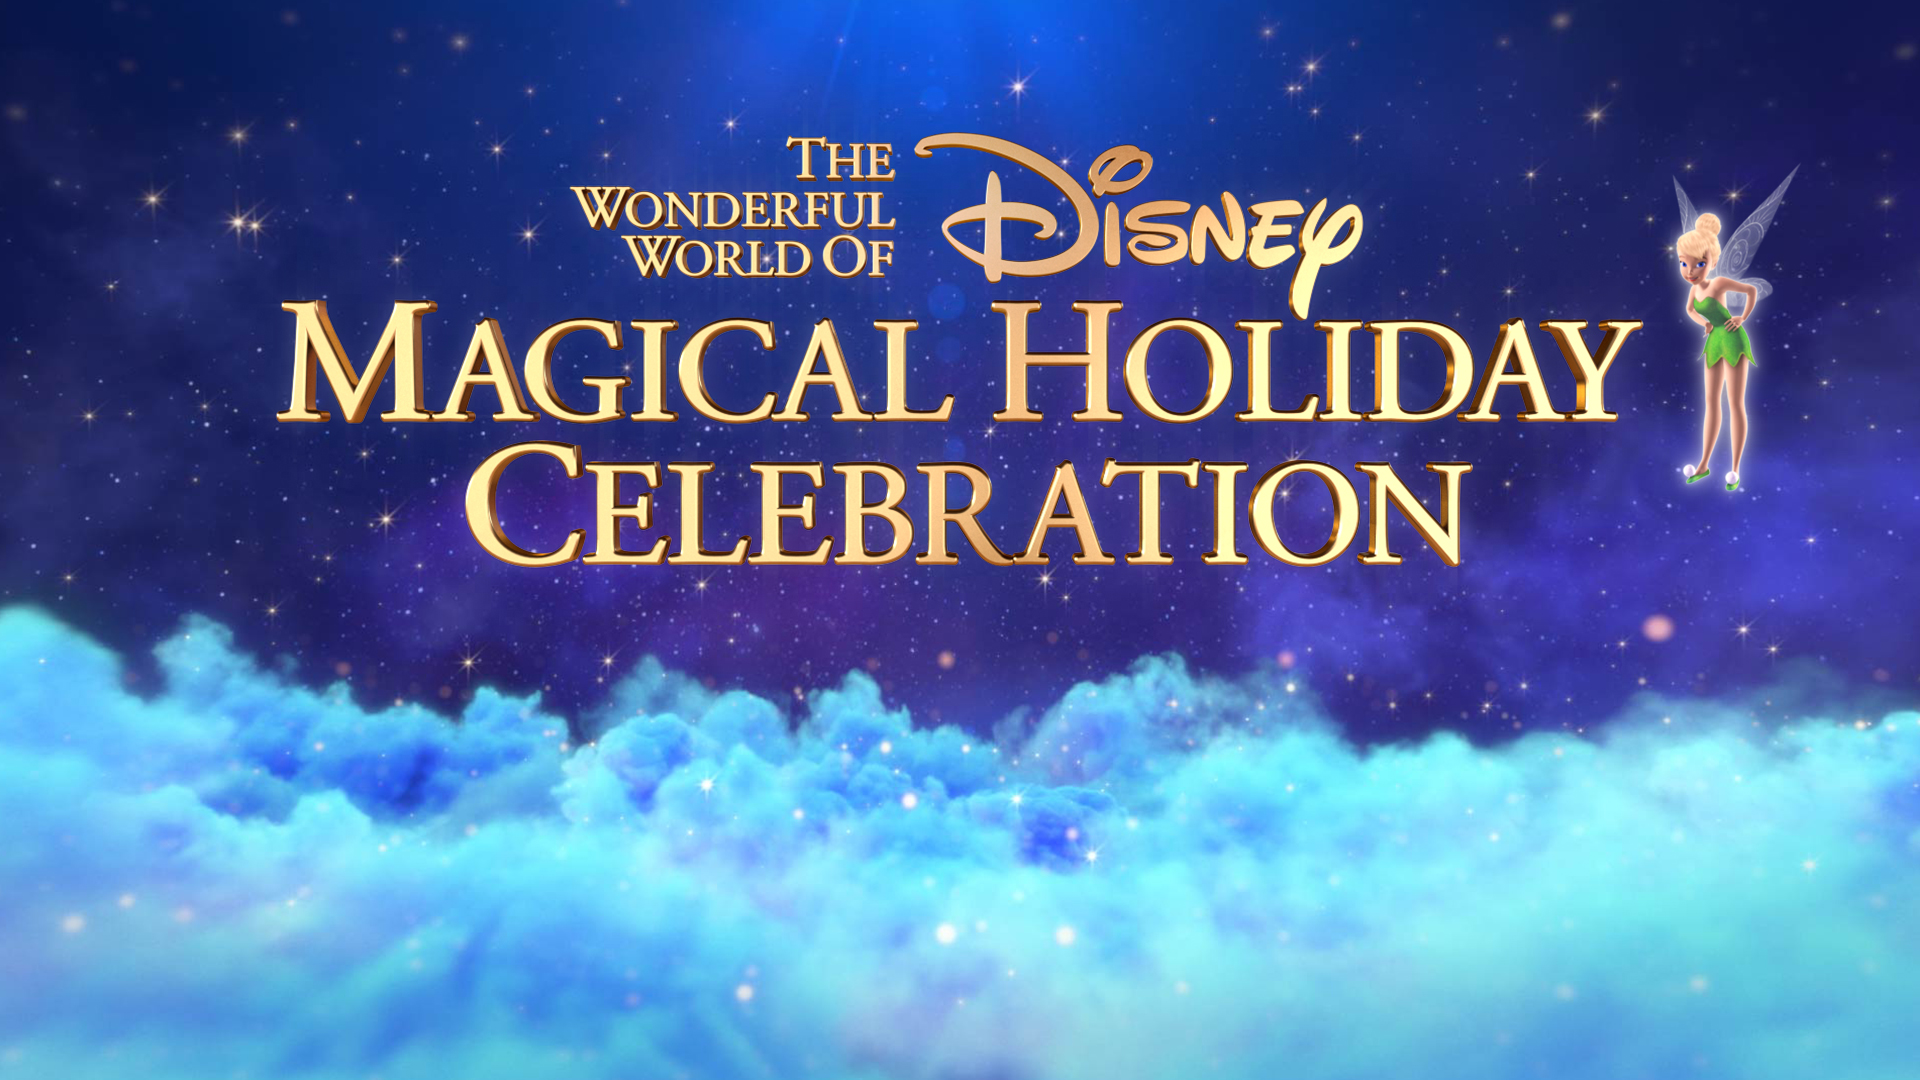 Watch "The Wonderful World of Disney Magical Holiday Celebration" Now